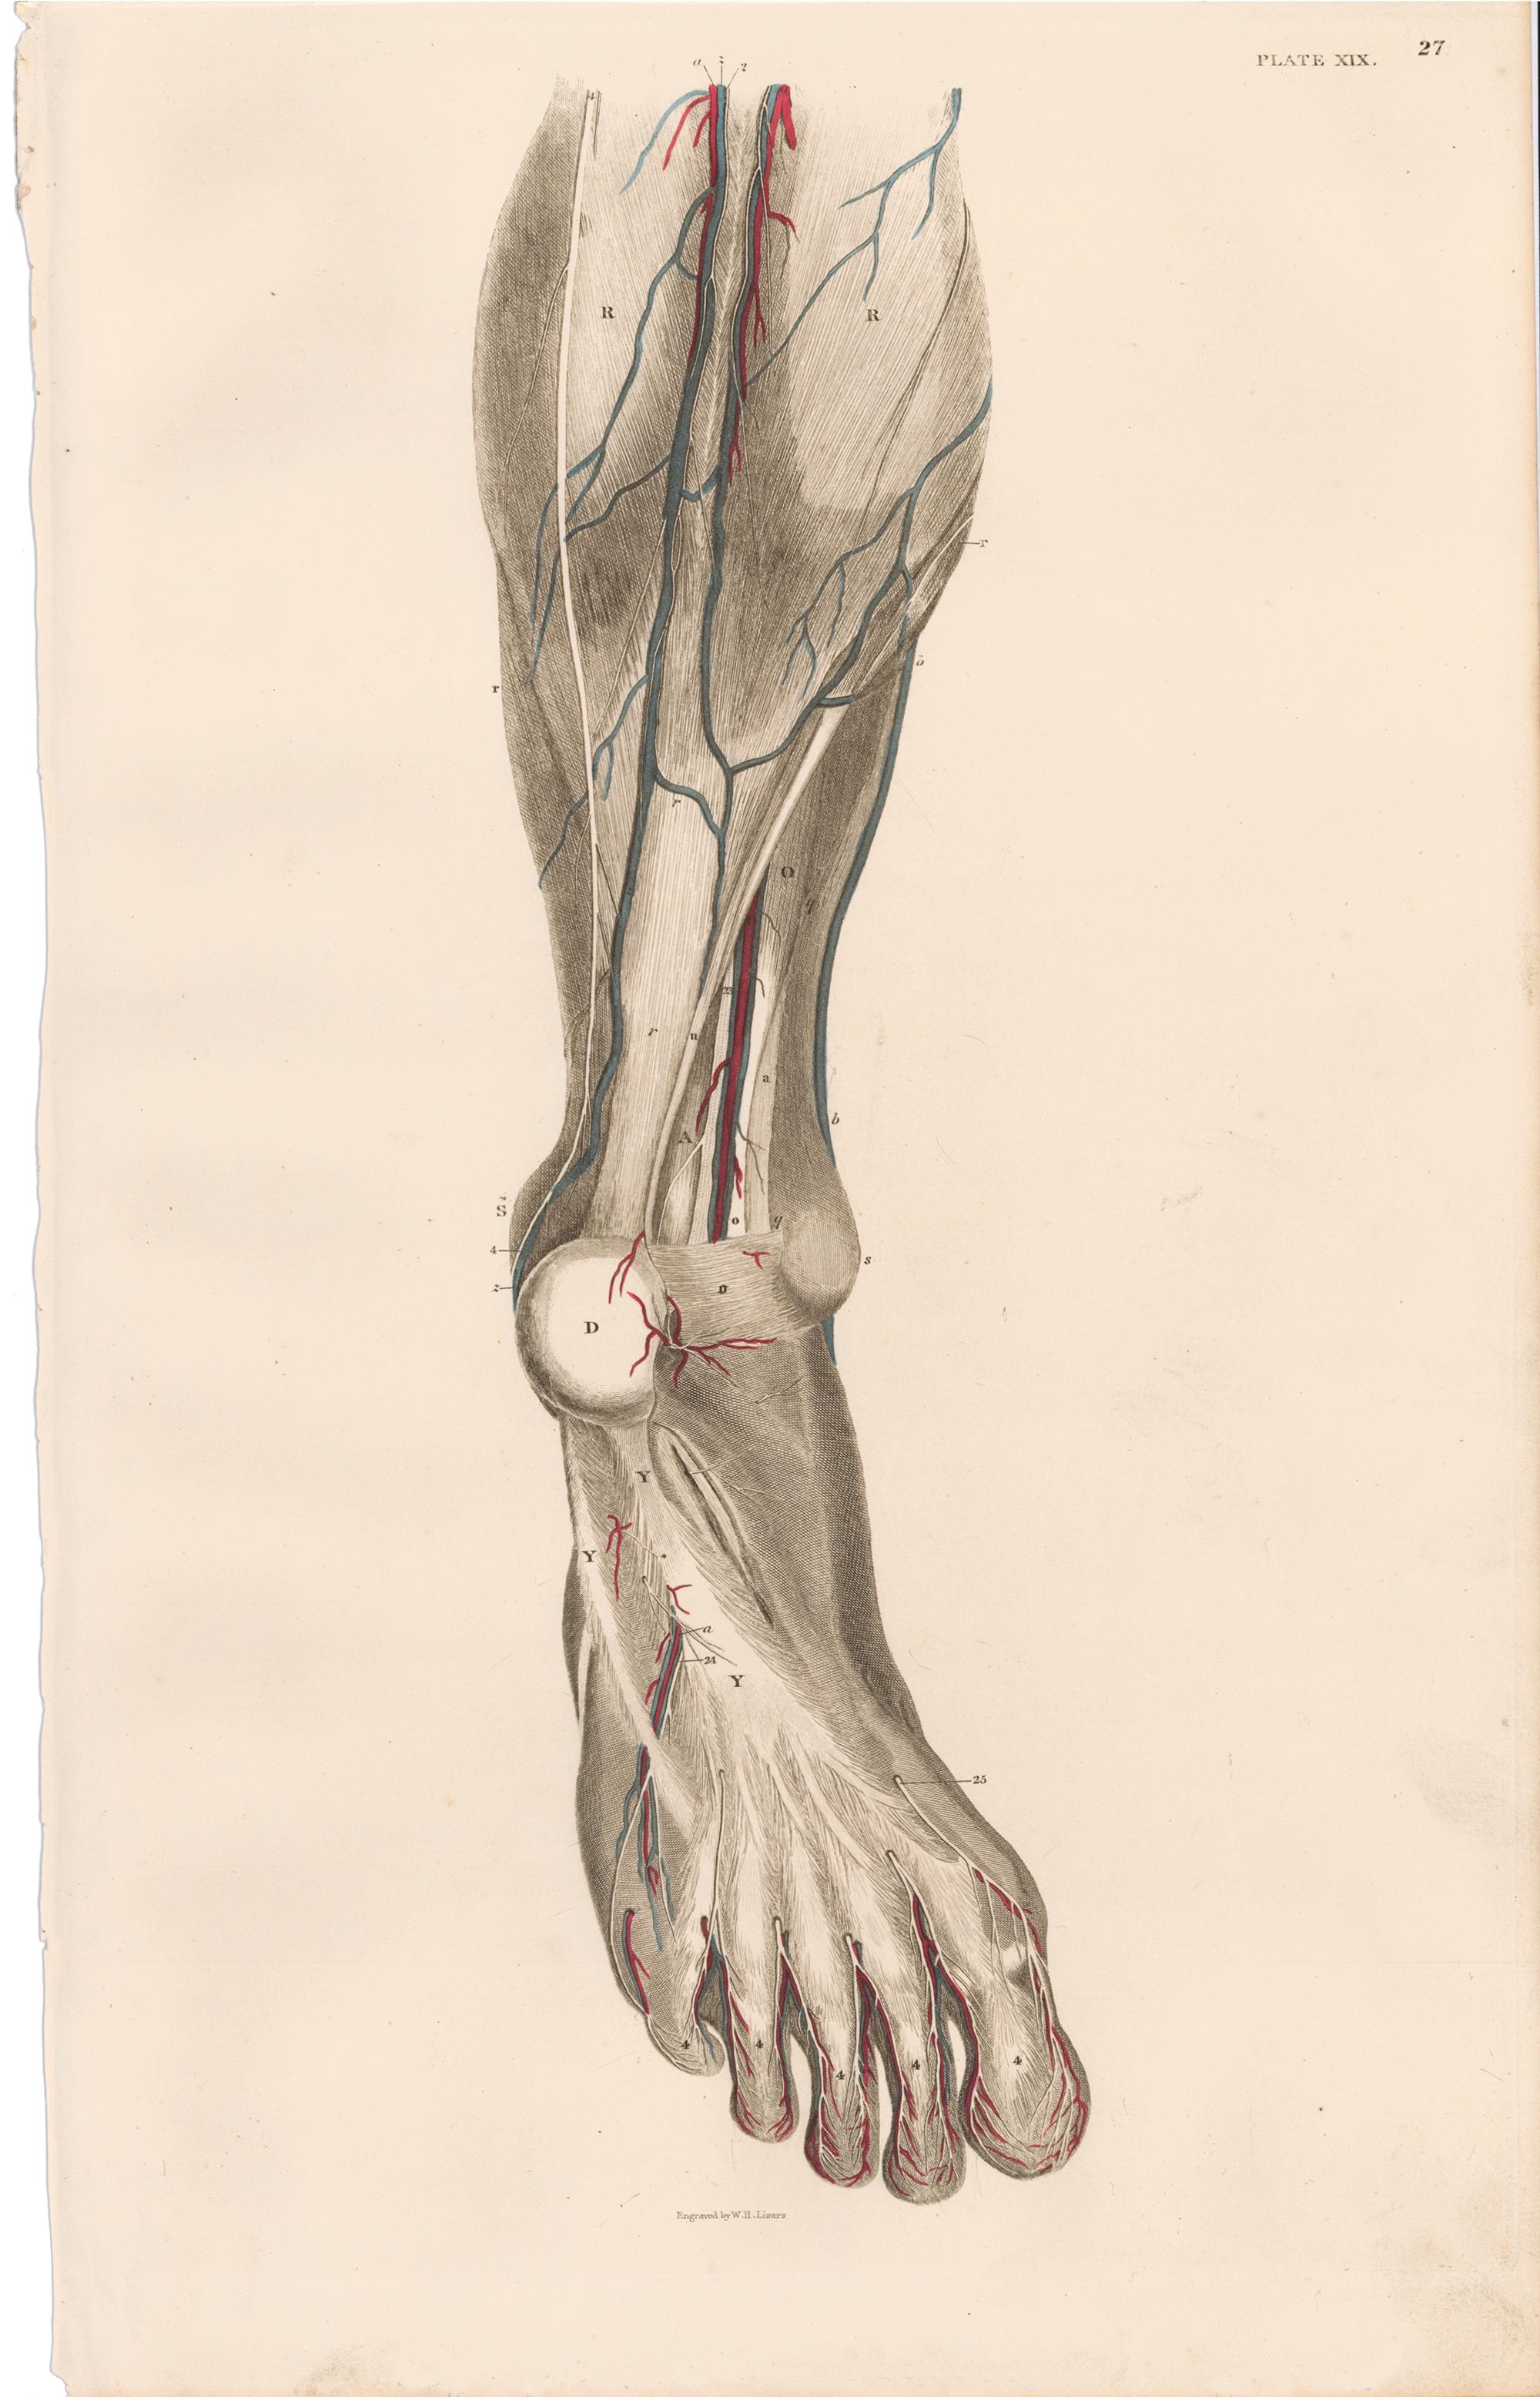 Anatomical Engraving of a Human Lower Leg - Print by John Lizars